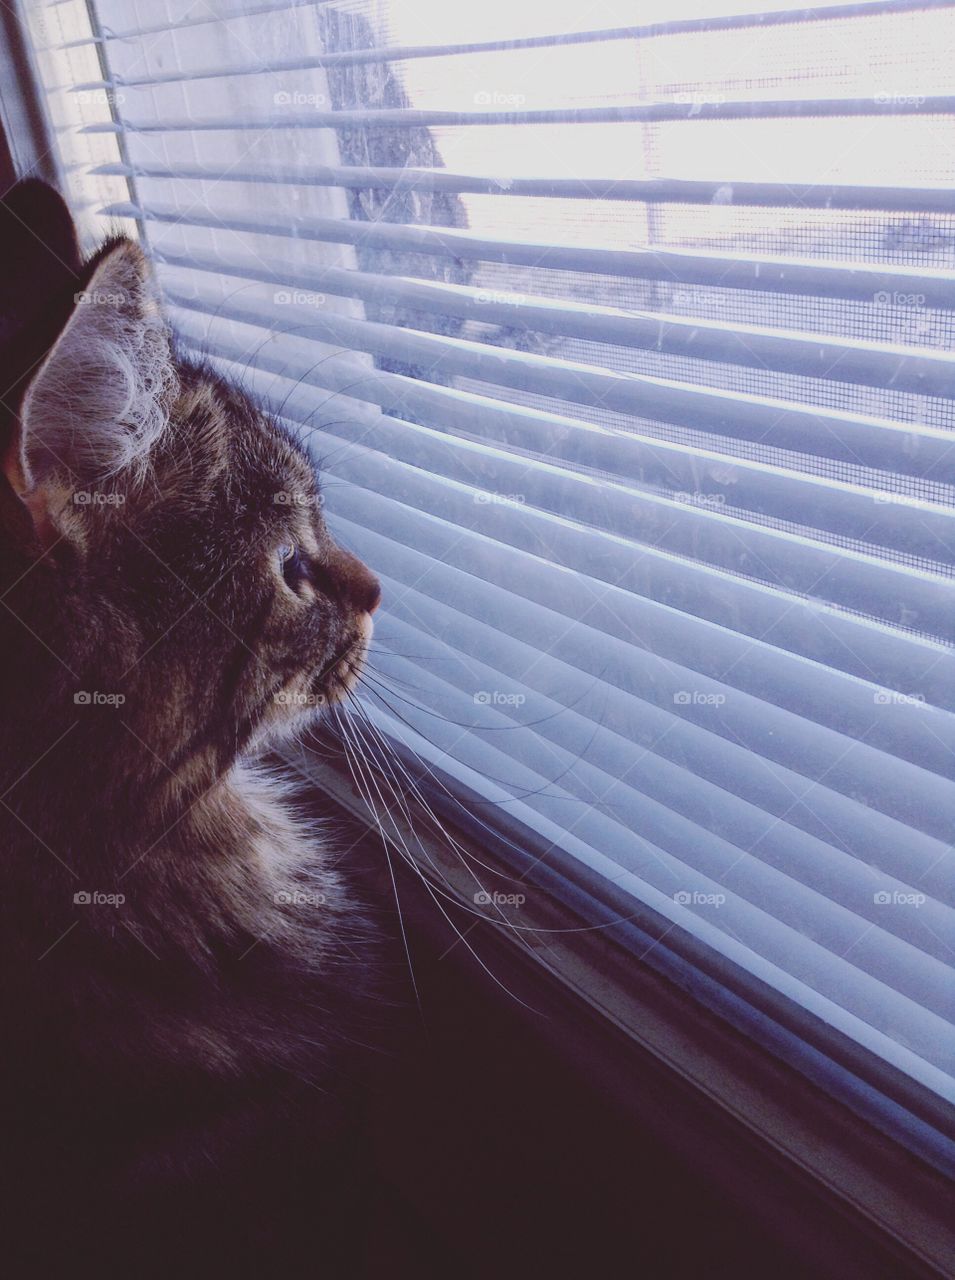 Kitty looking through the window